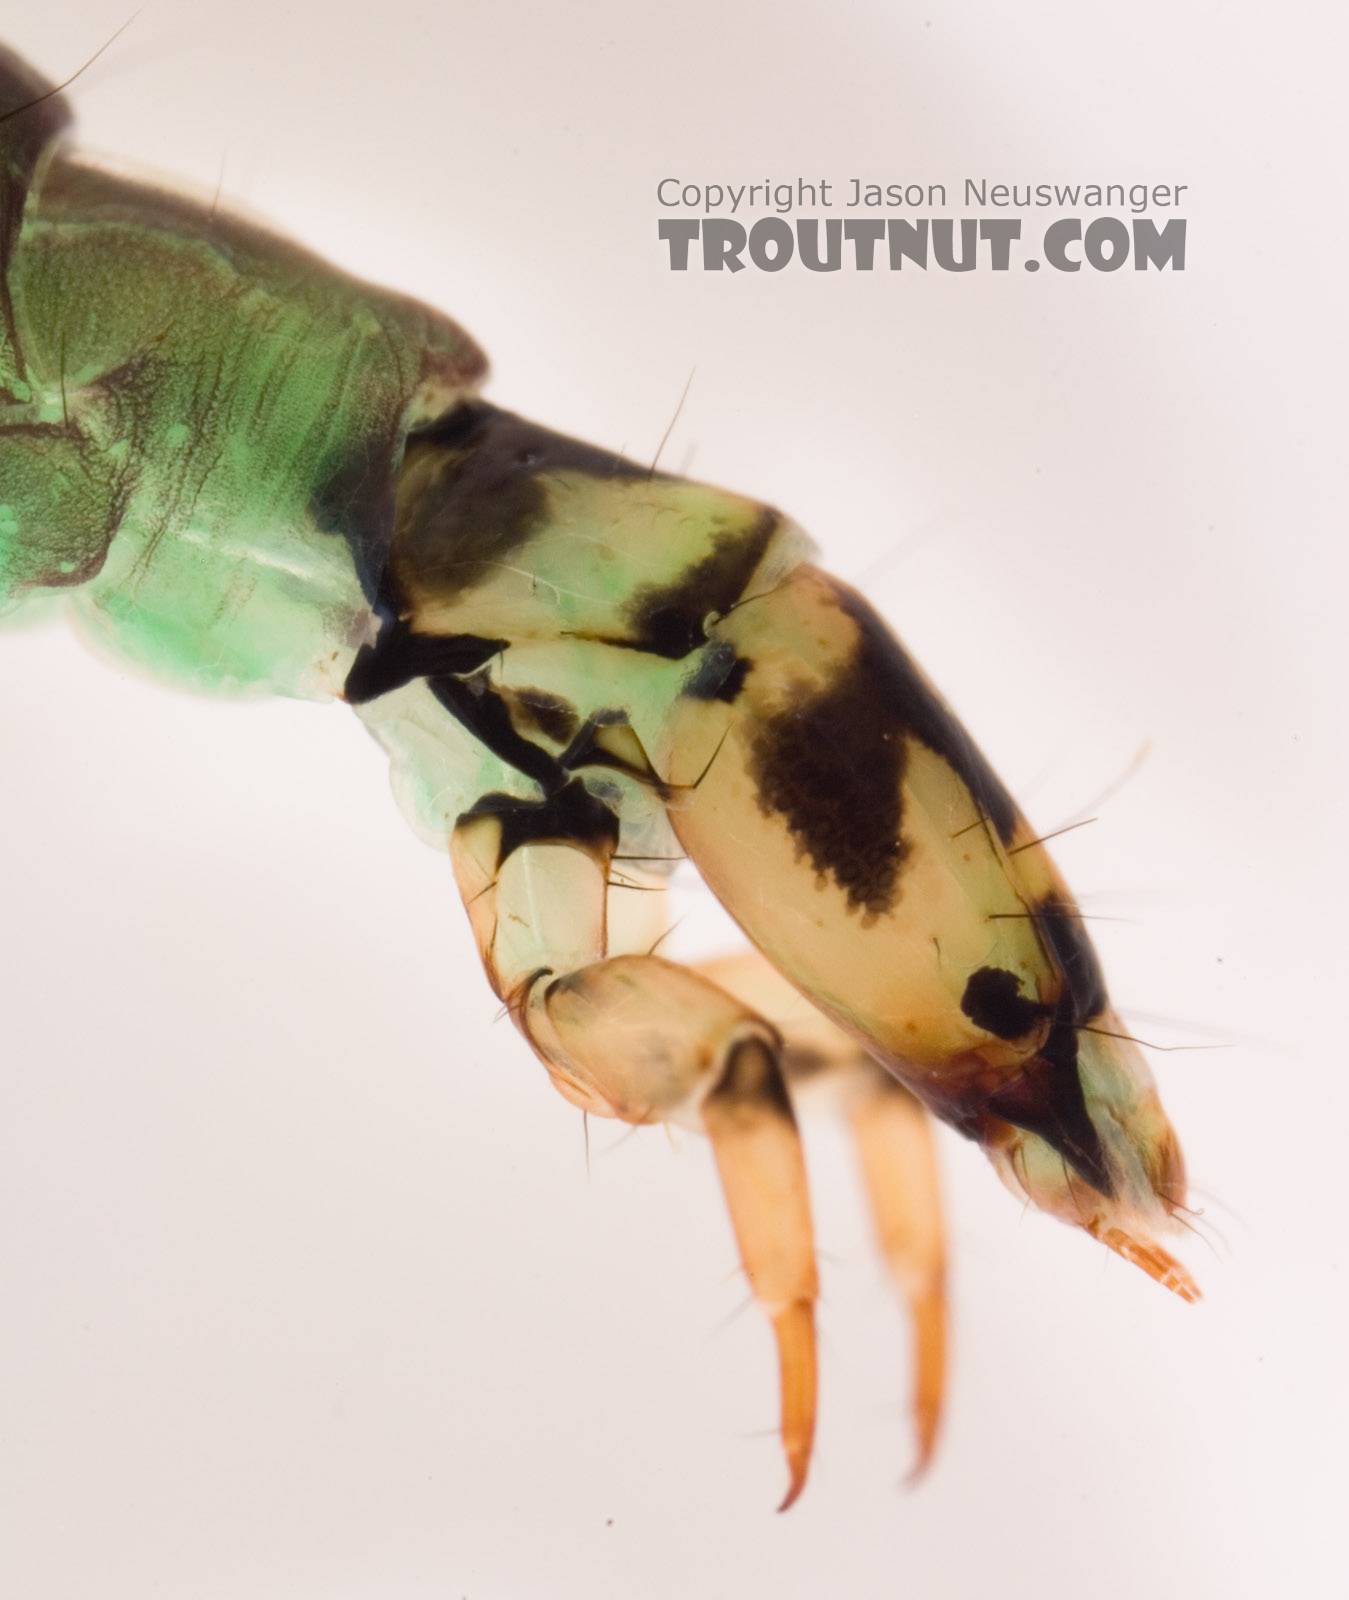 Rhyacophila fuscula (Green Sedge) Caddisfly Larva from Mystery Creek #62 in New York